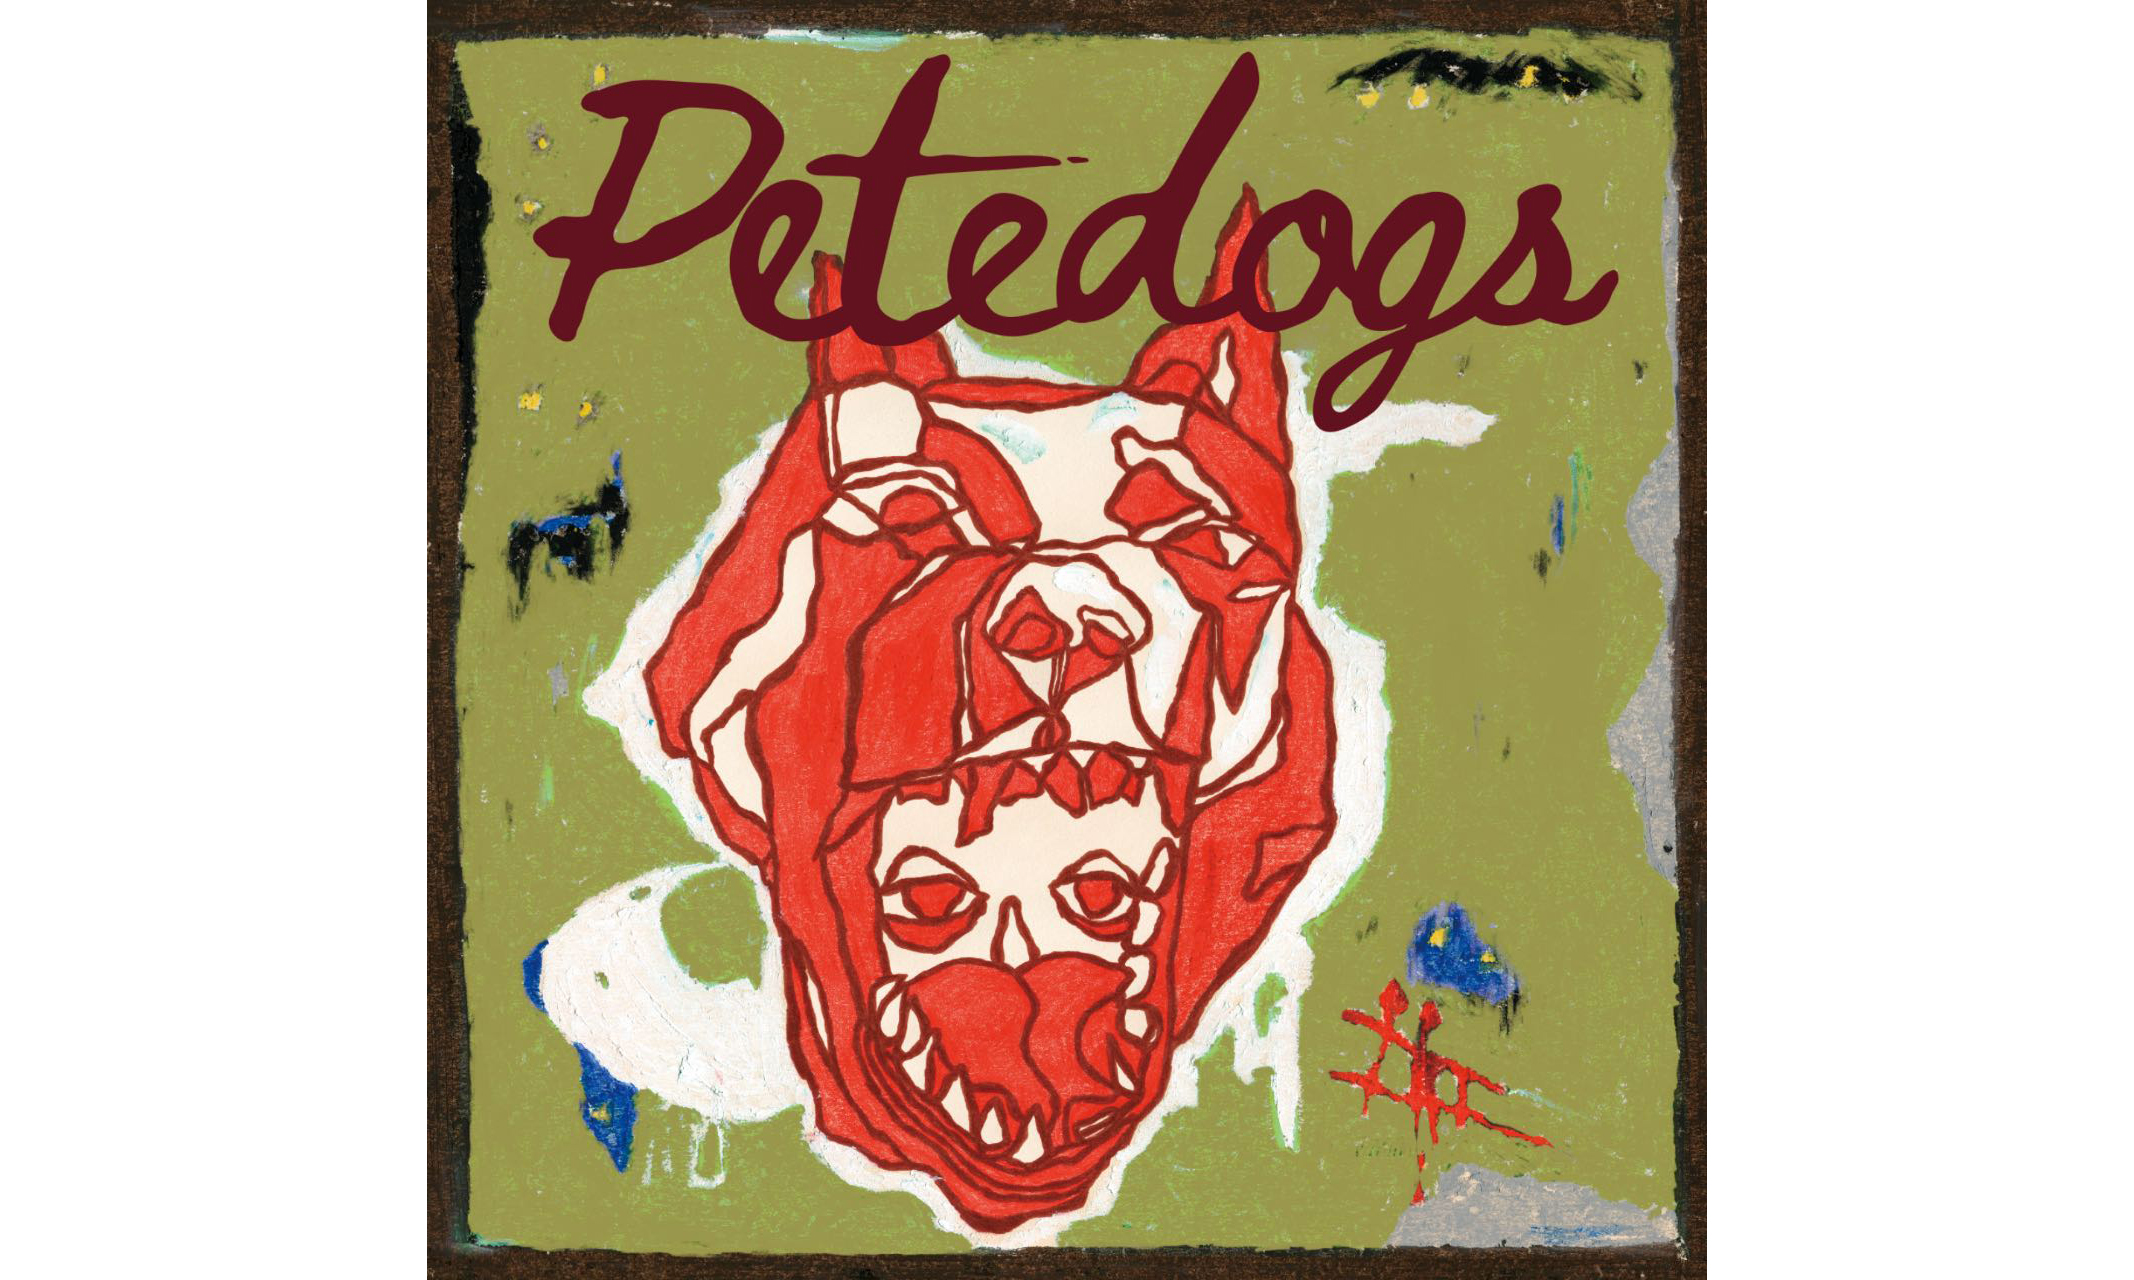 Sleeping Dogs 乐队与制作人 nehcetep 合作的全新 EP《Petedogs》正式发行